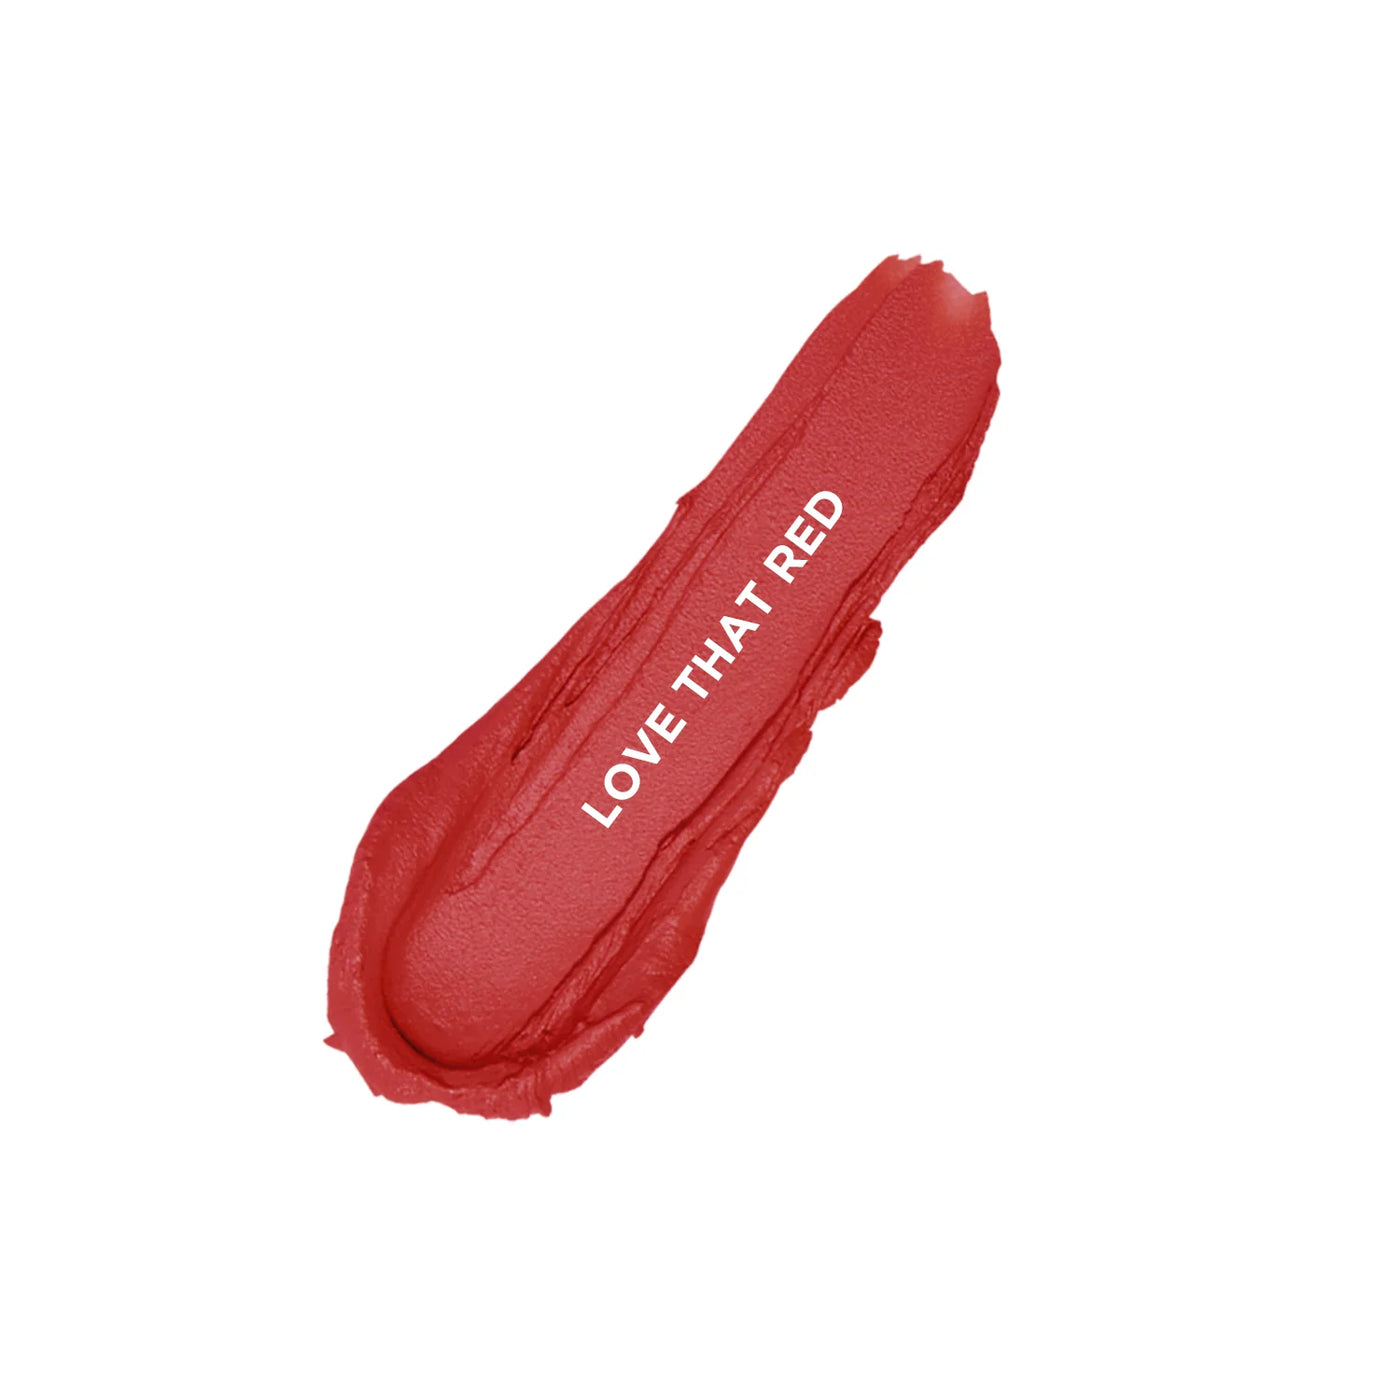 Revlon Super Lustrous Lipstick Combo (Chocolate Velvety + Just Me + Love That Red)